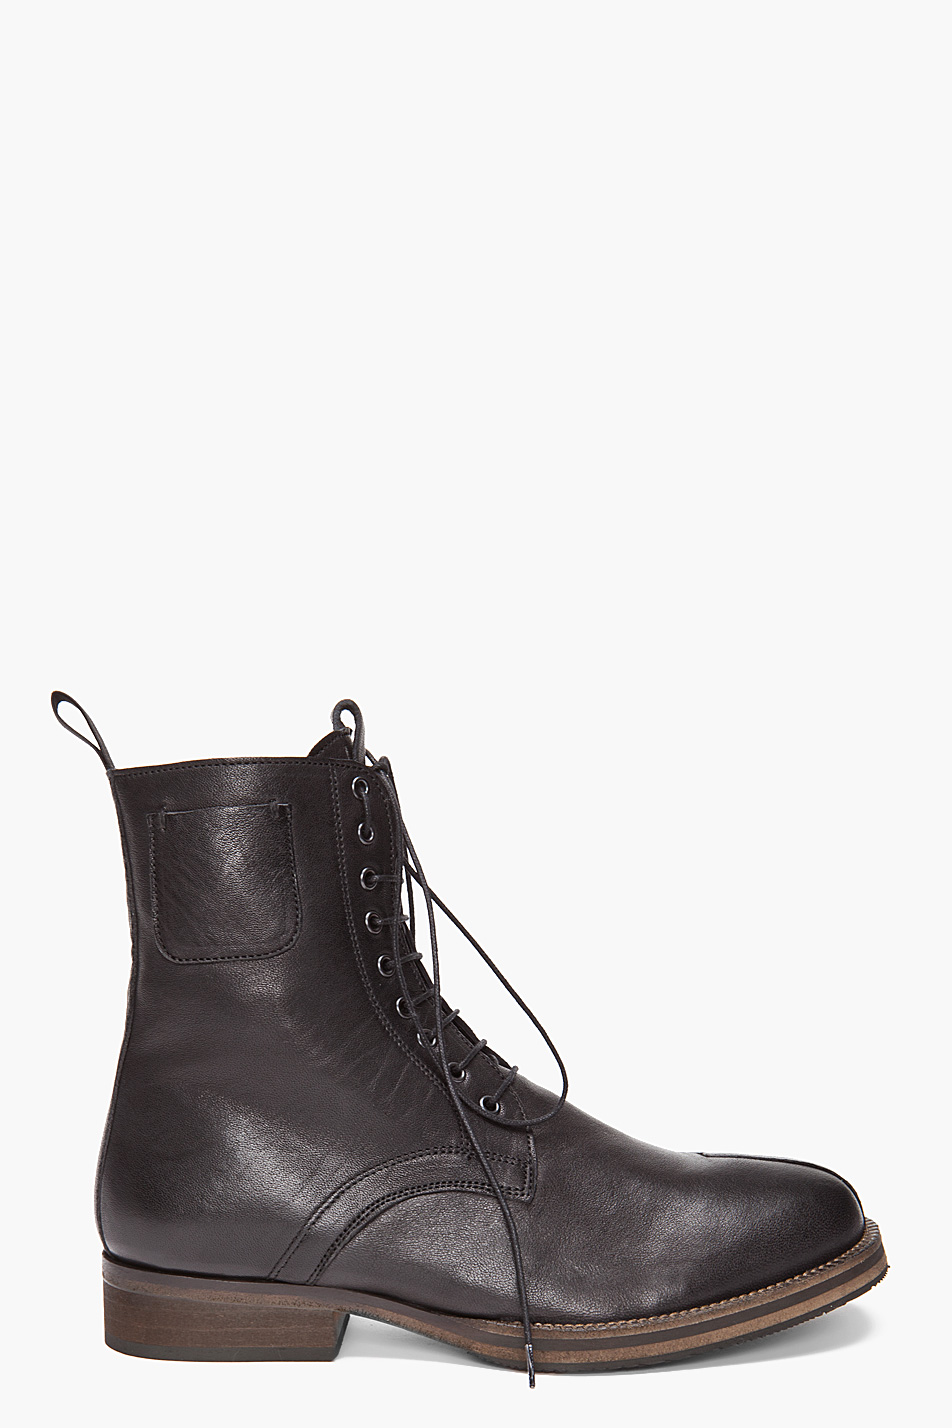 Fifth avenue shoe repair Boondockers Boots in Black for Men | Lyst